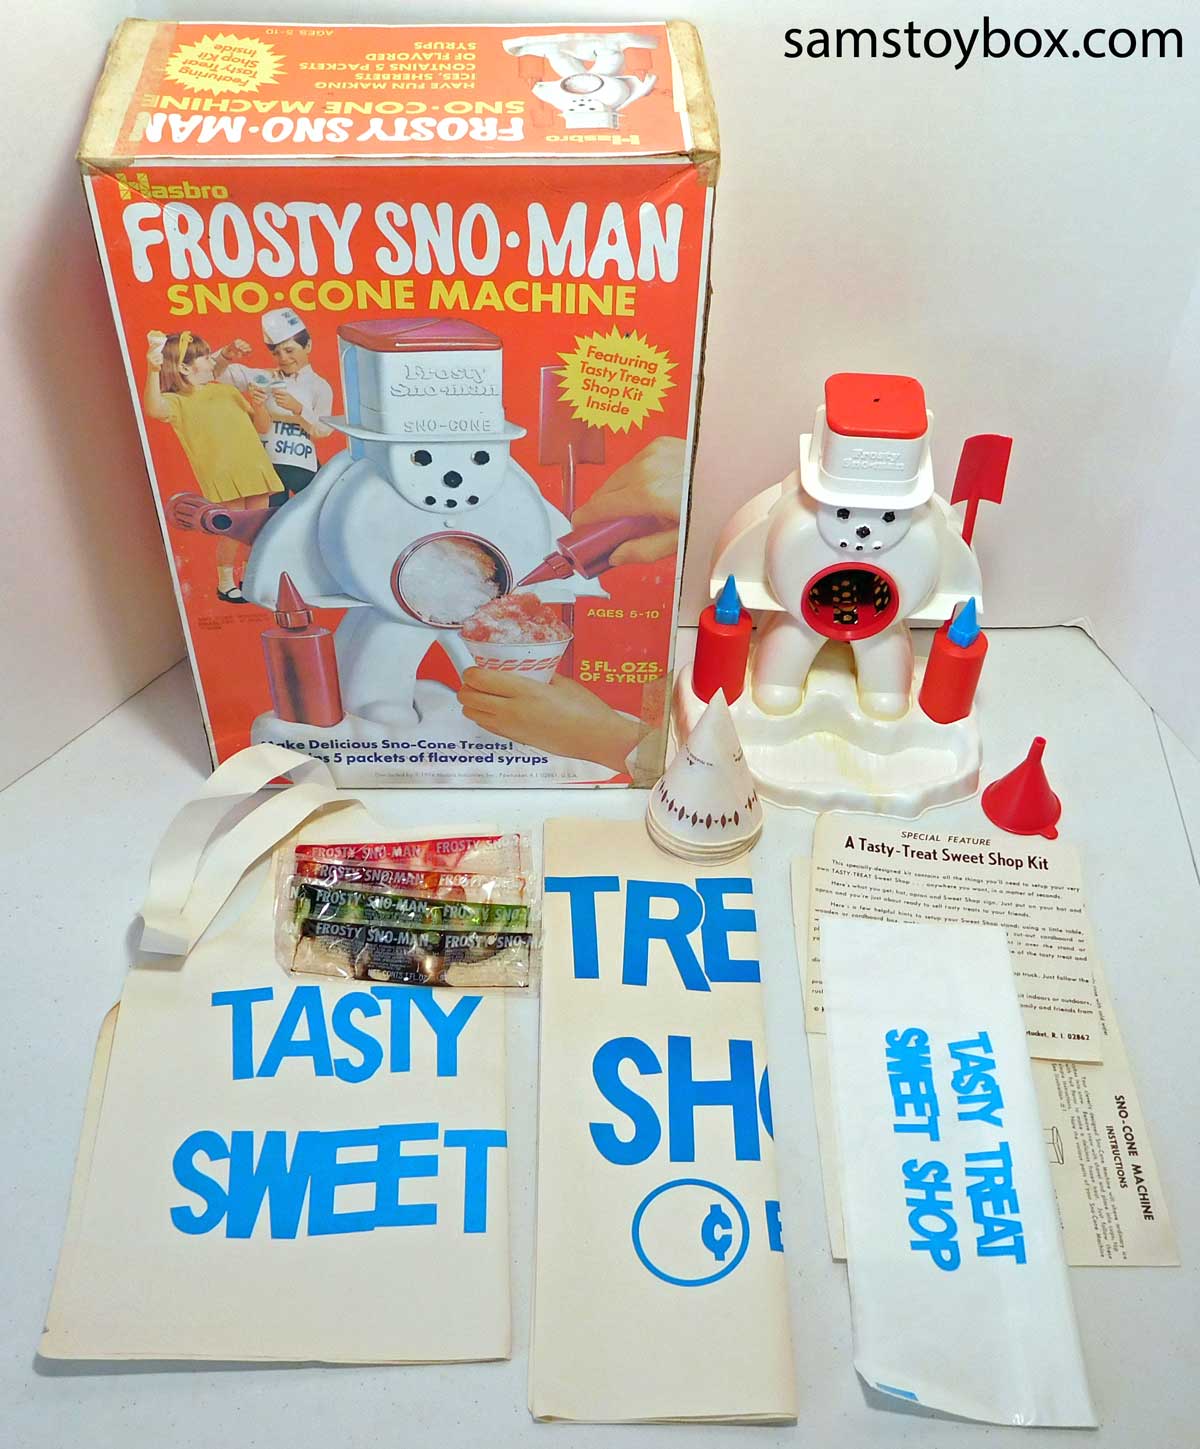 Frosty Sno-Man Sno-Cone Machine Contents